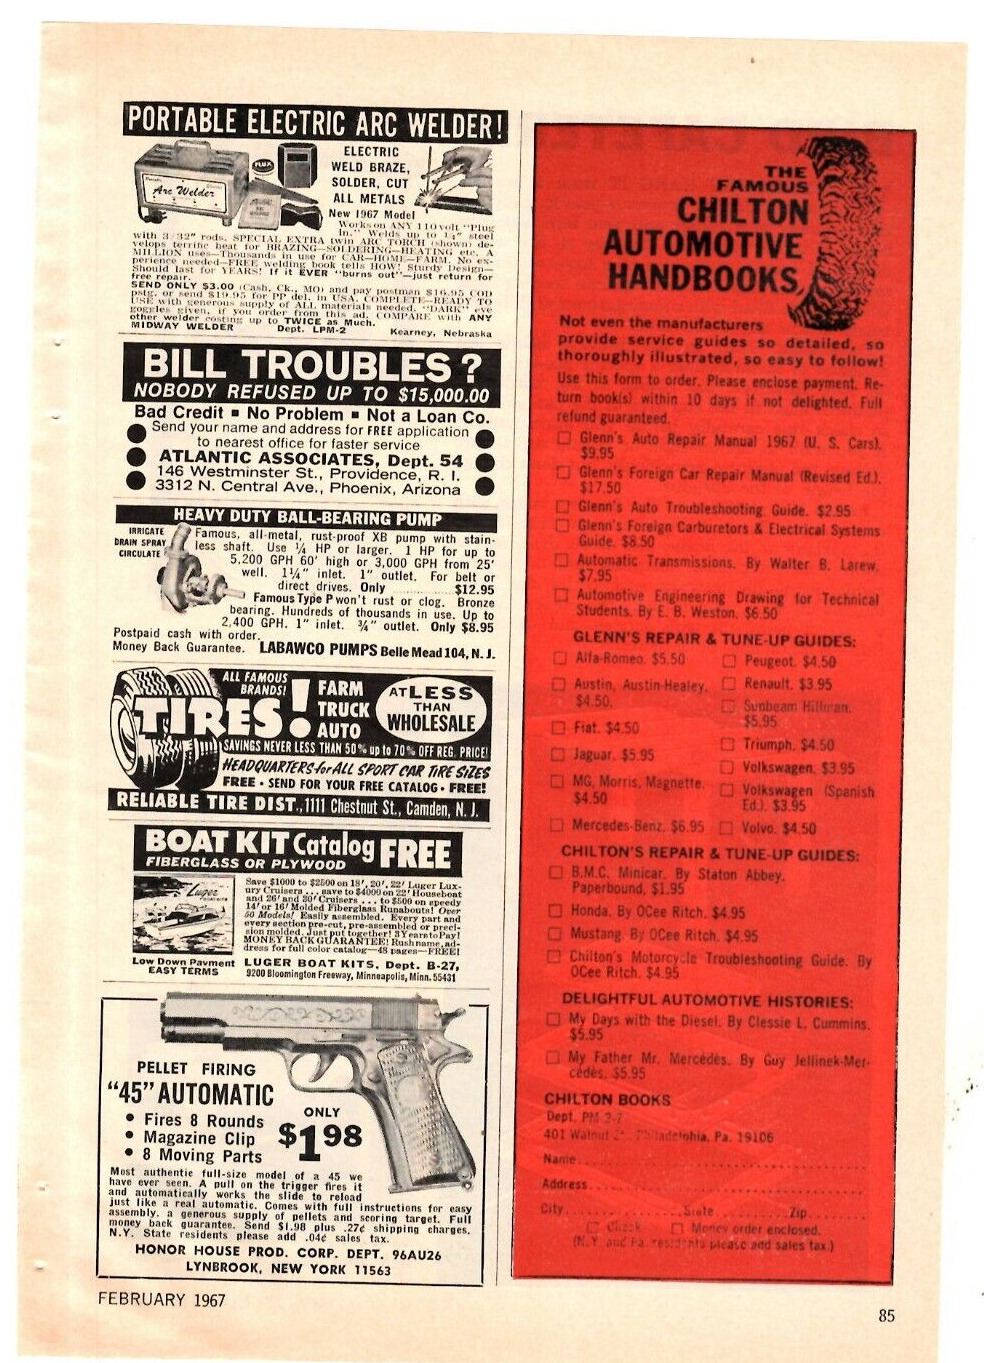 1967 Print Ad Chilton Automotive Handbooks Mail In Coupon Glenn's Repair Guides